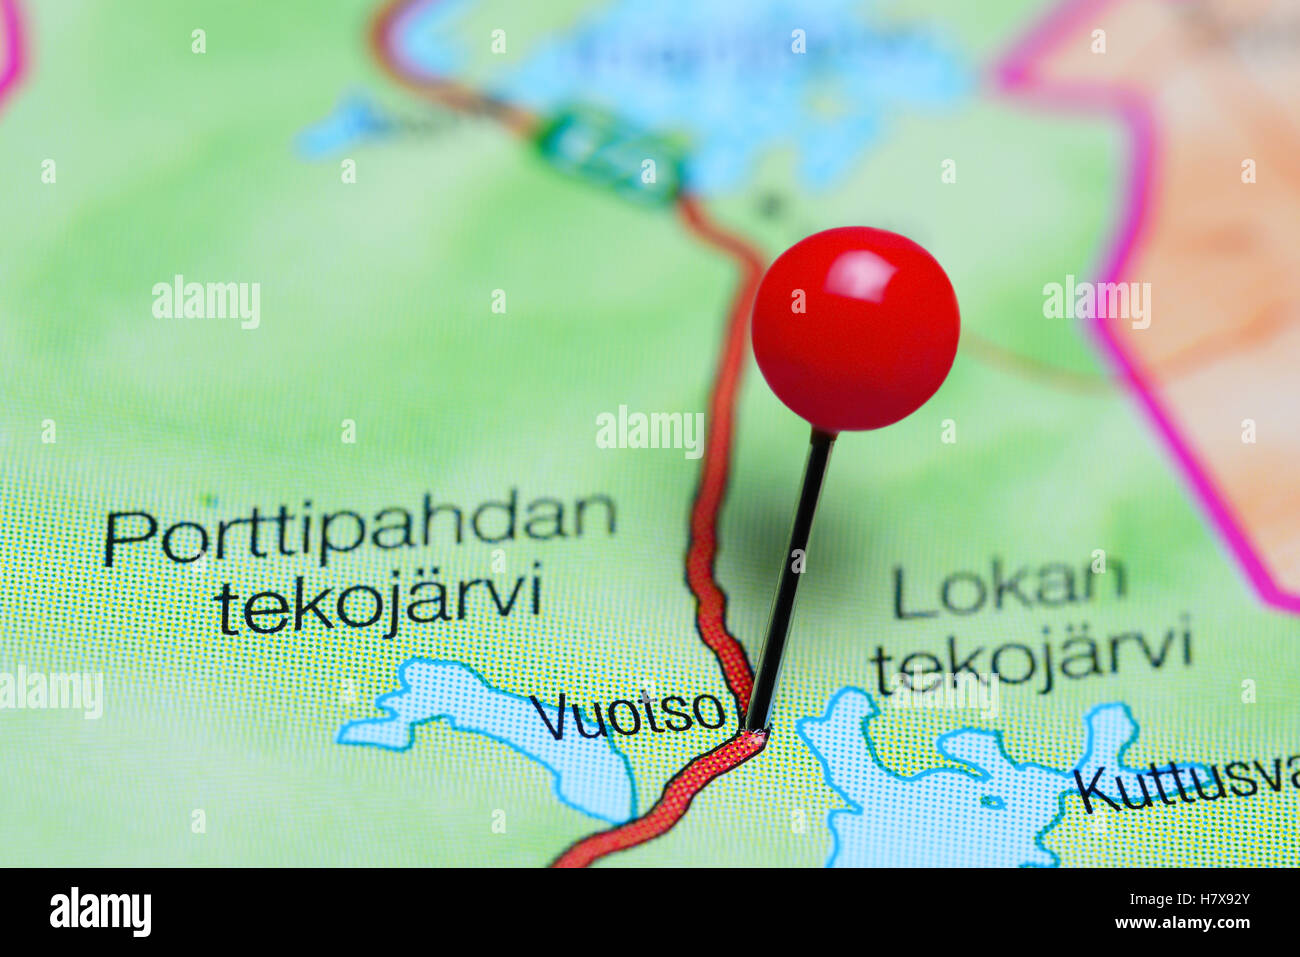 Vuotso pinned on a map of Finland Stock Photo